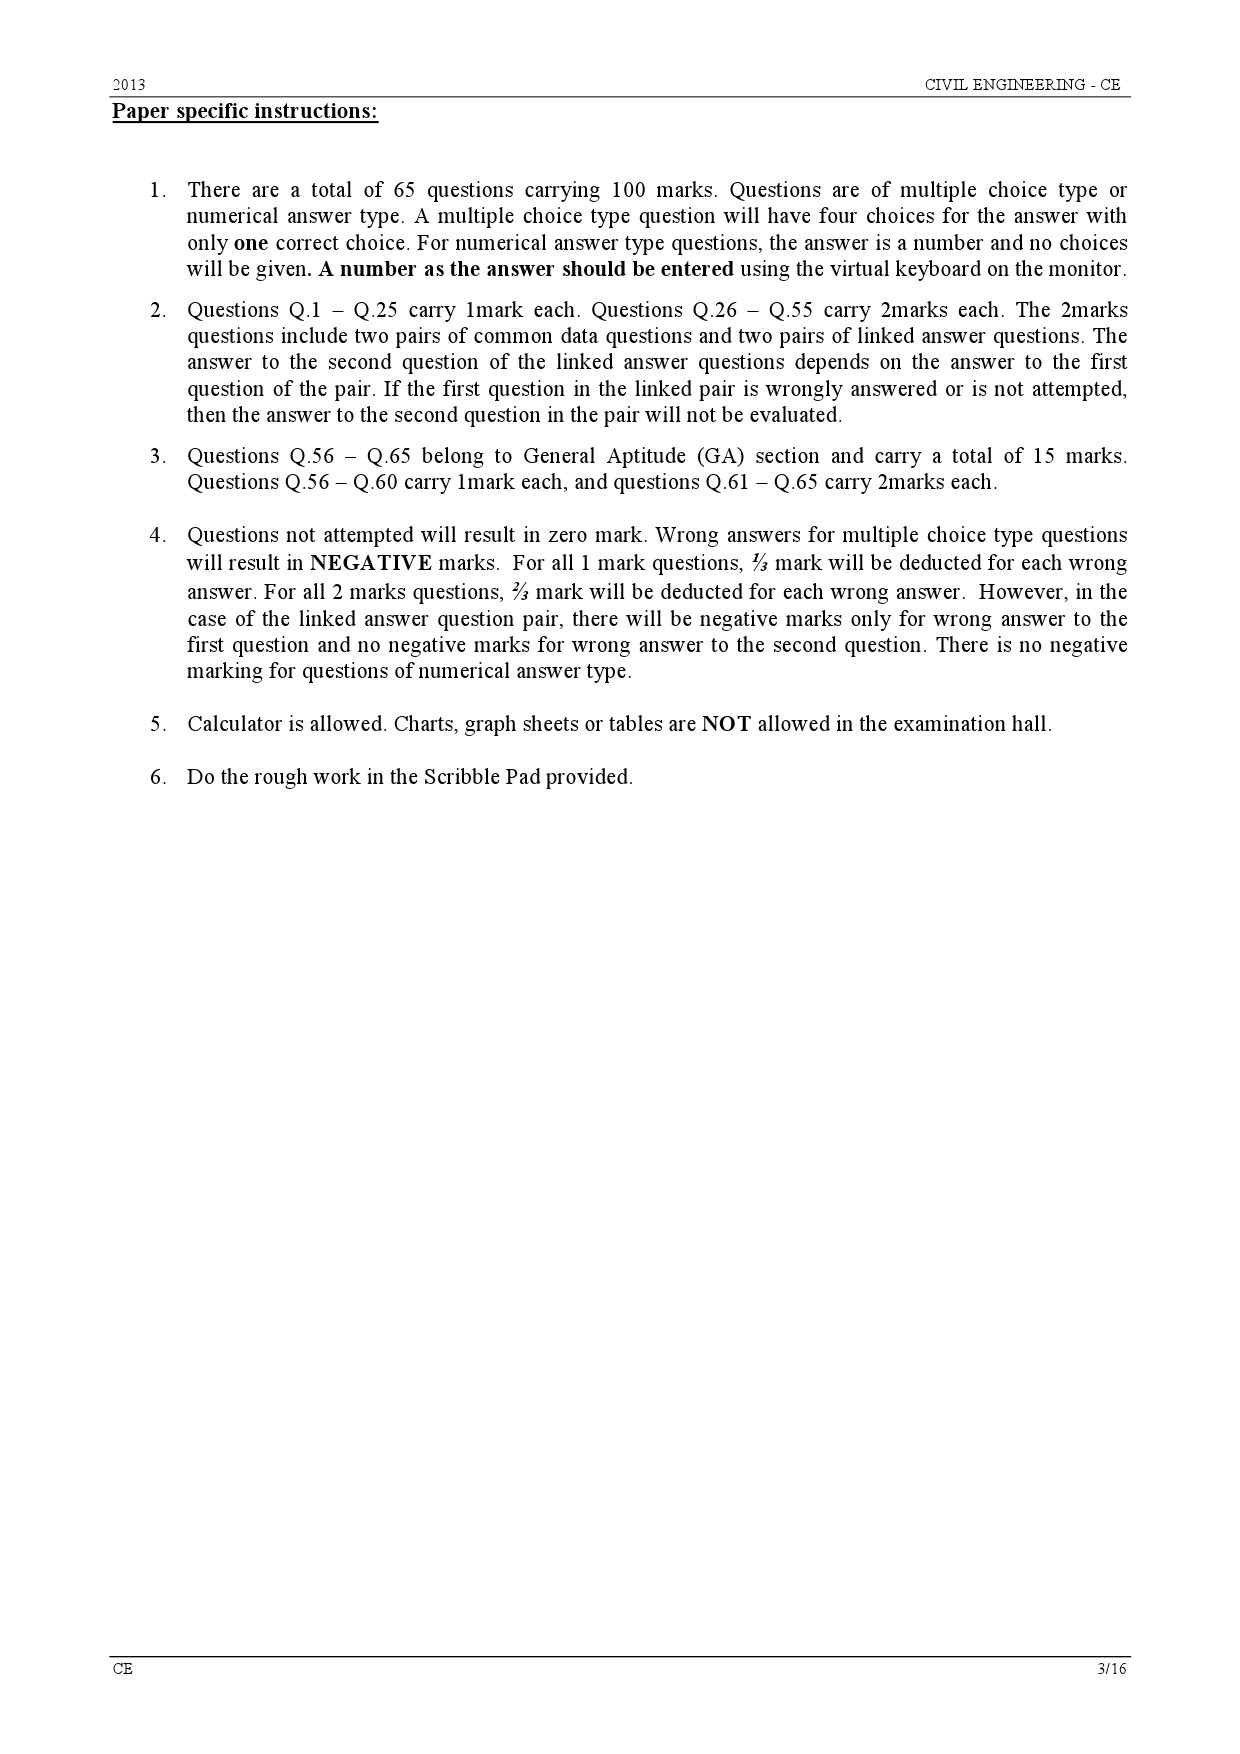 GATE Exam Question Paper 2013 Civil Engineering 3